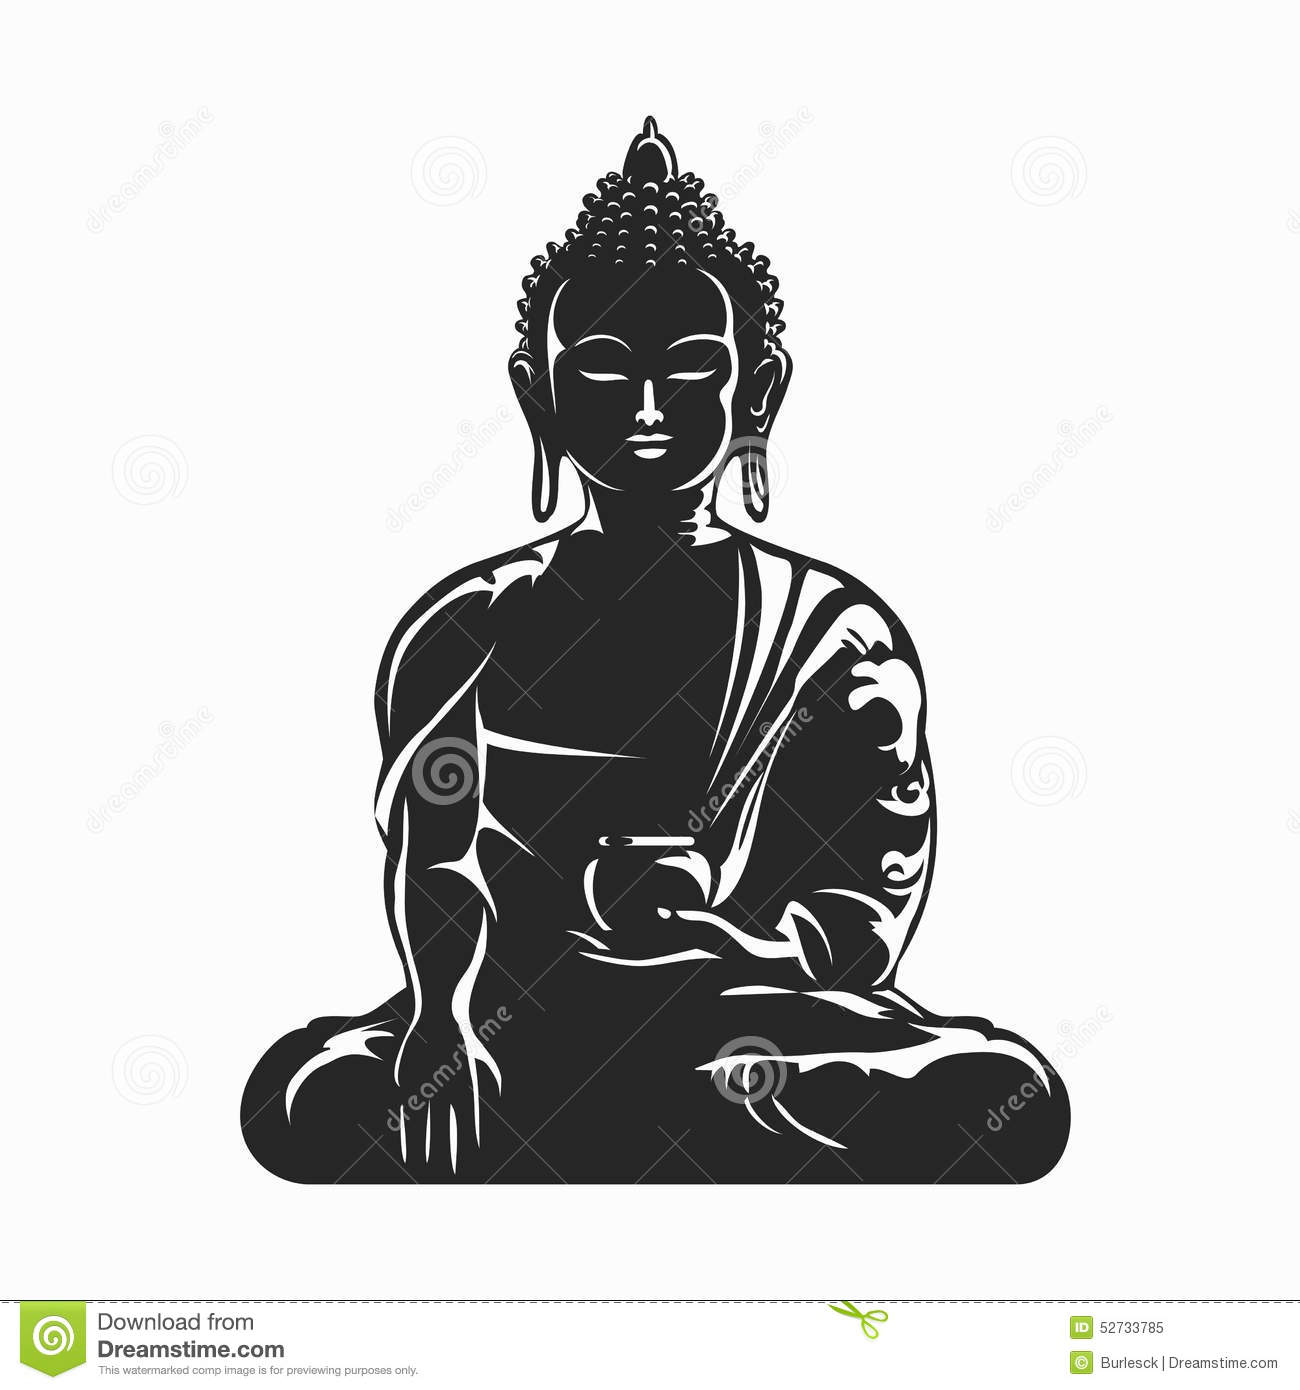 Buddha Silhouette